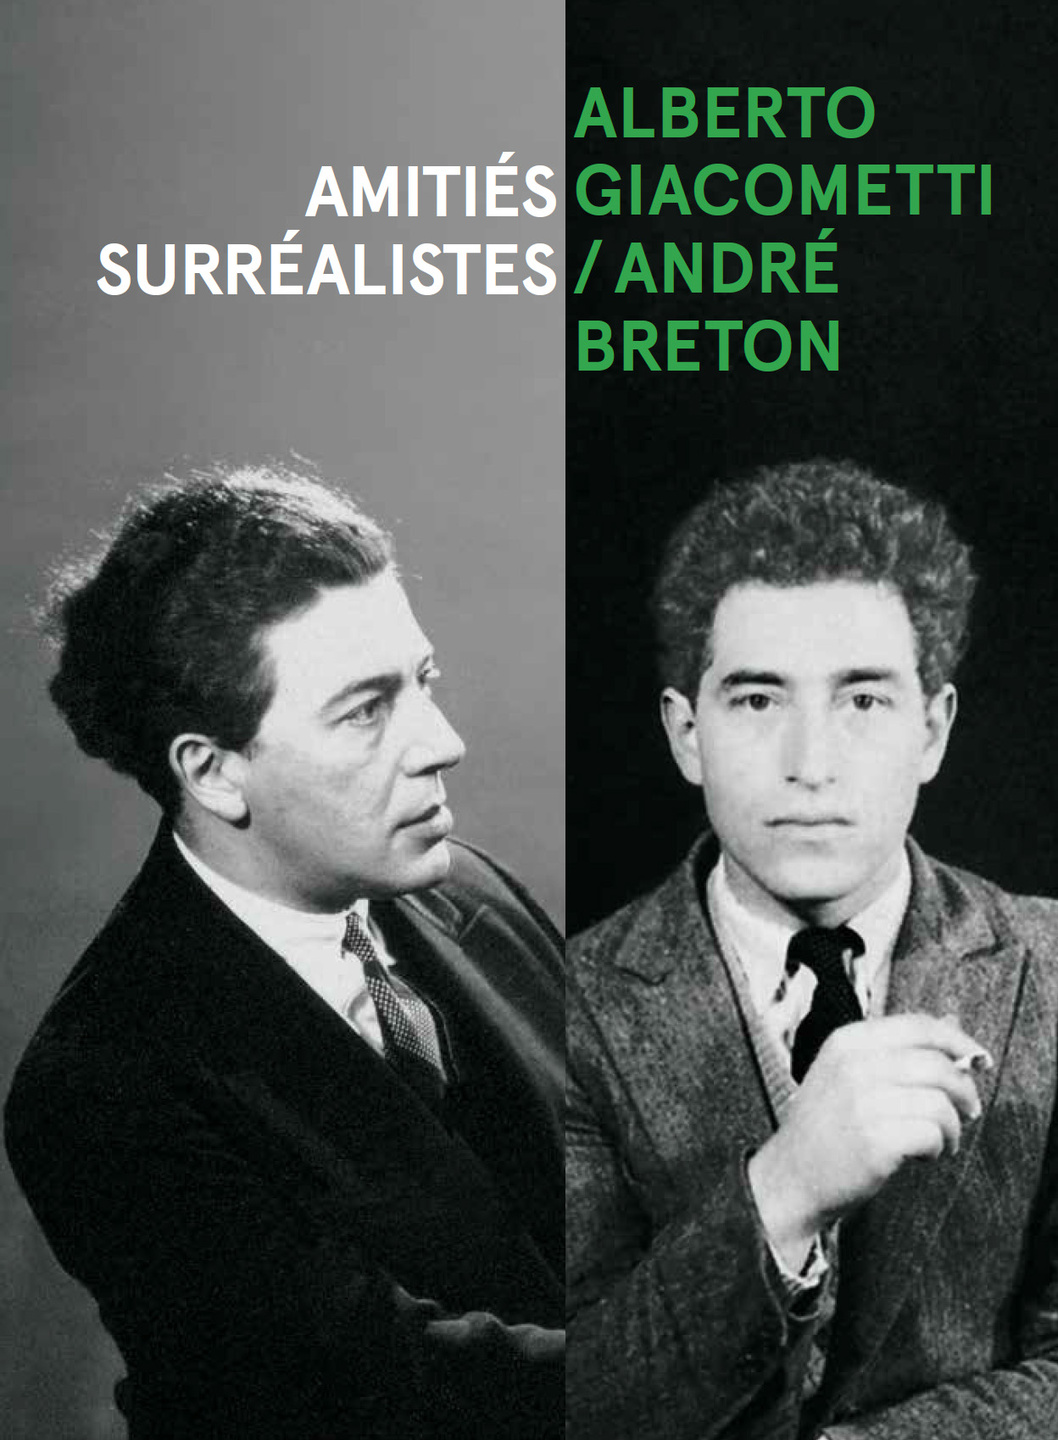 Fondation Giacometti -  Alberto Giacometti / André Breton. Amitiés surréalistes